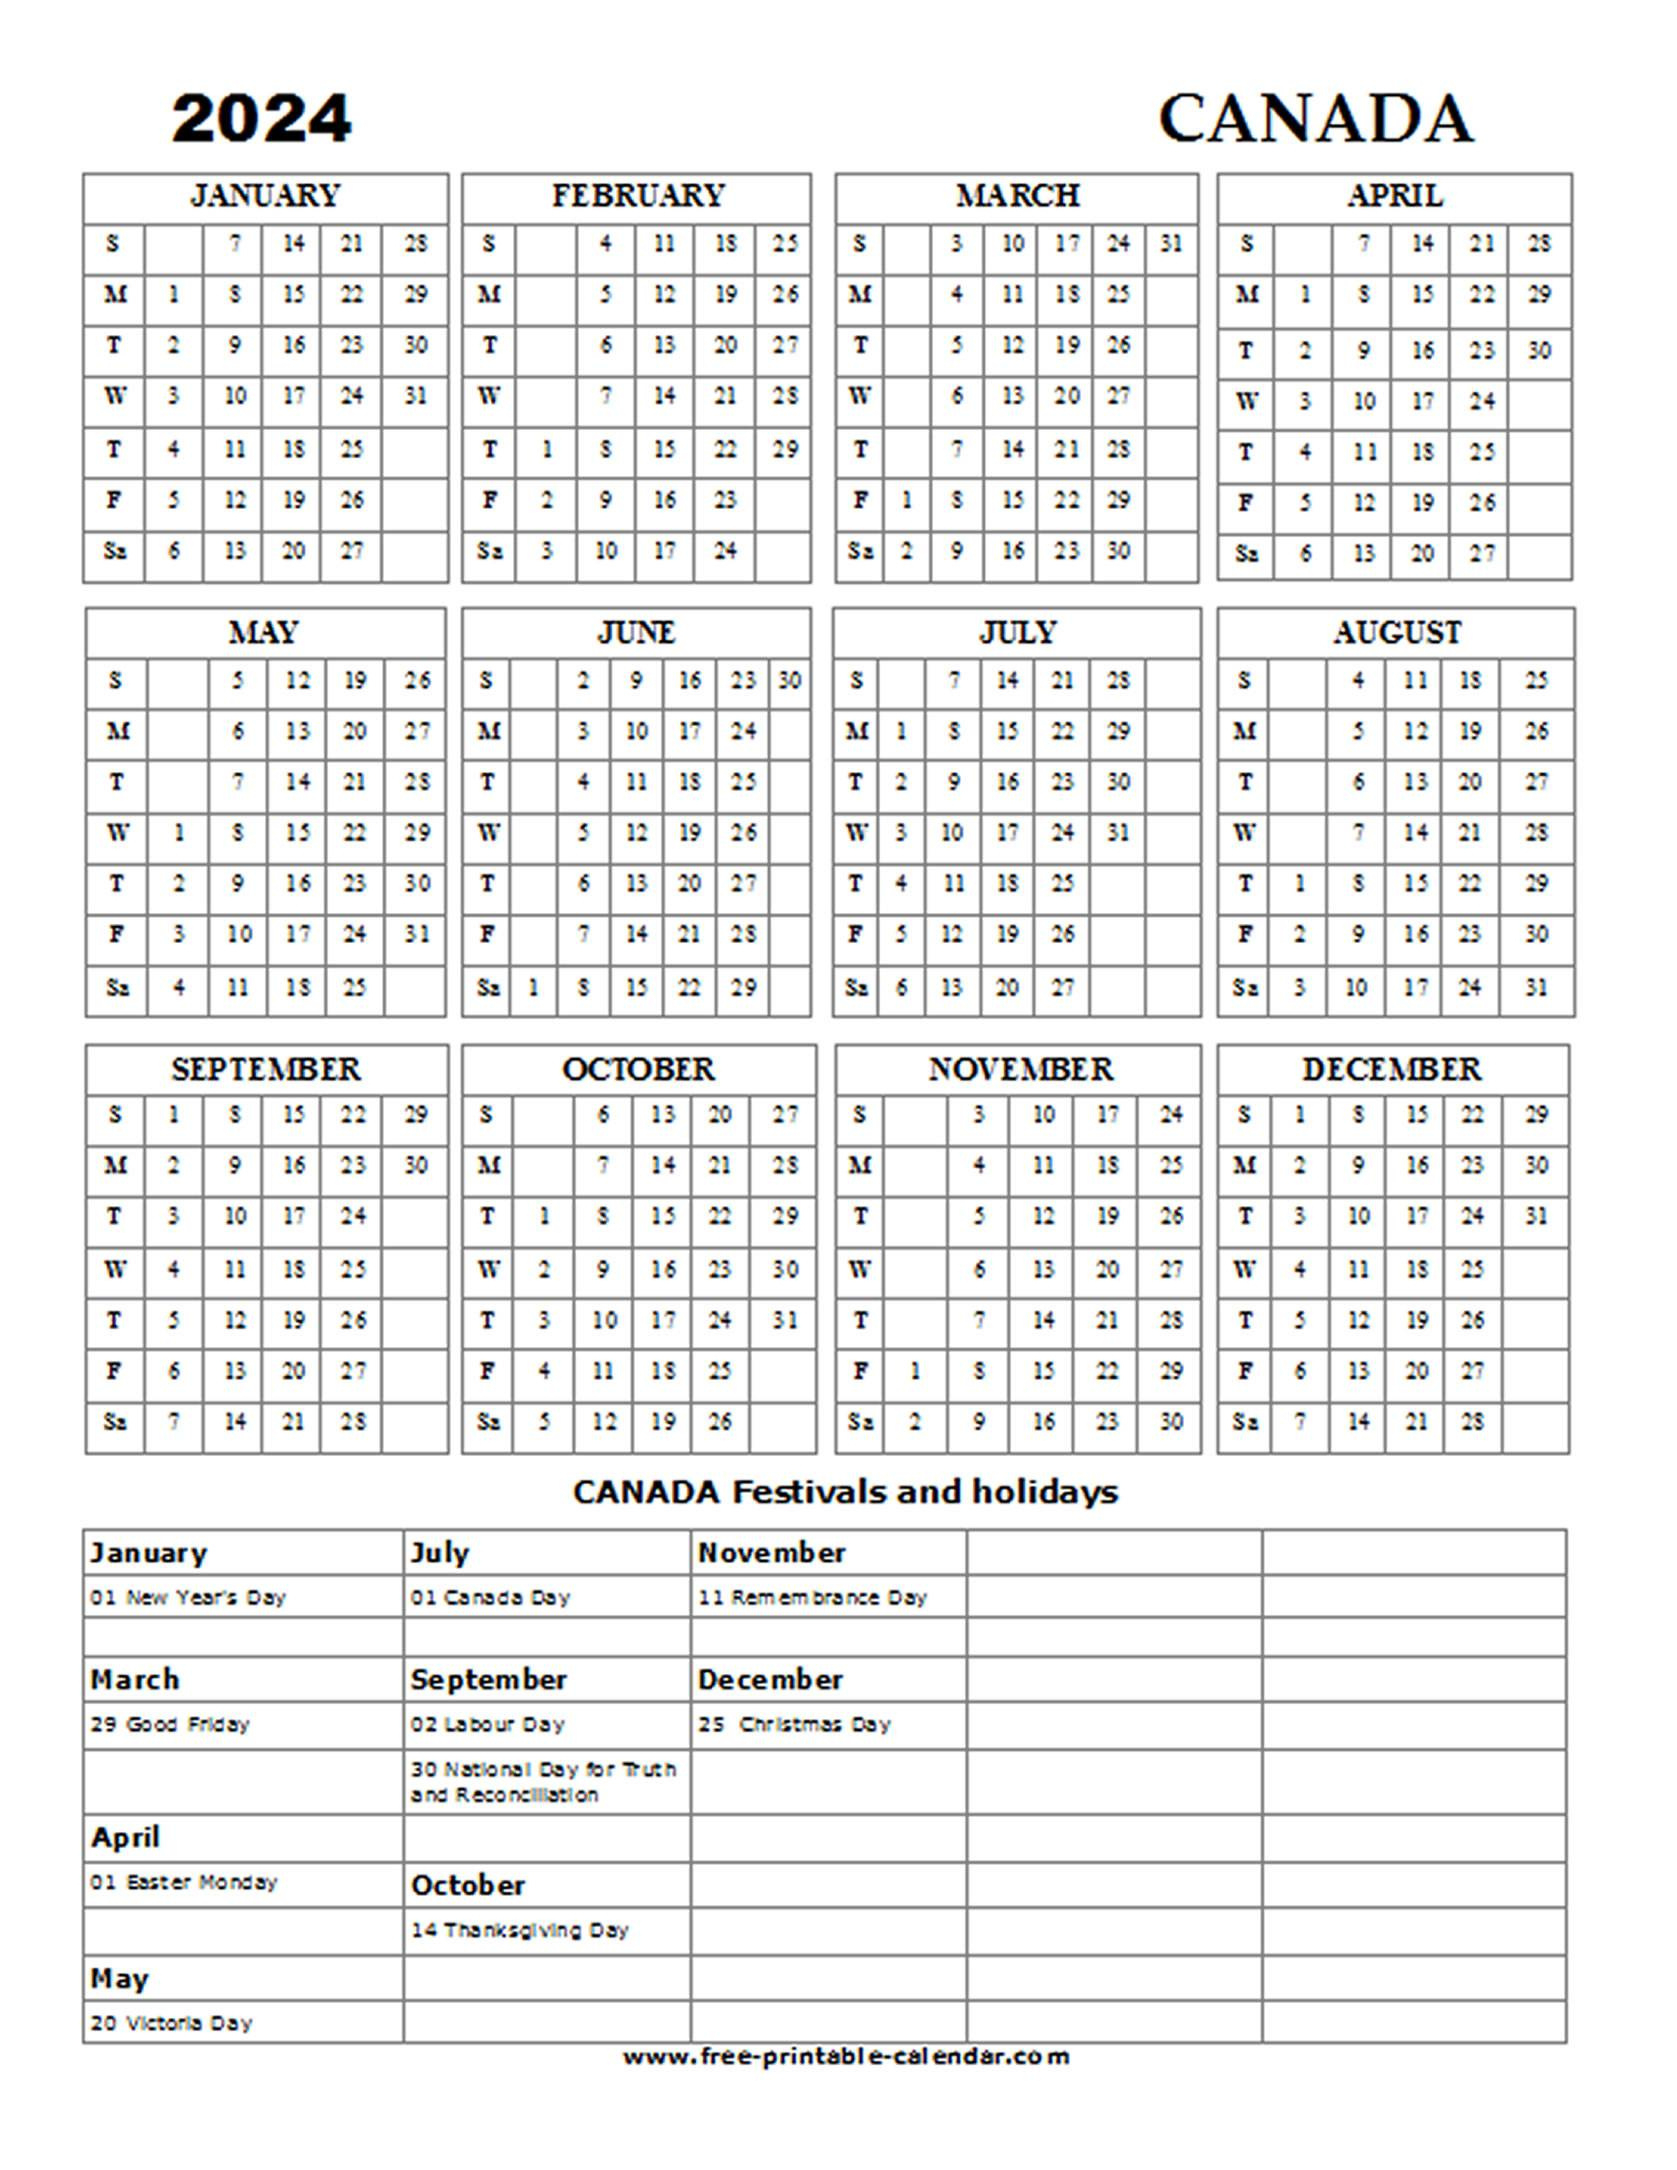 2024 Canada Holiday Calendar - Free-Printable-Calendar inside Free Printable Calendar 2024 Canada With Holidays